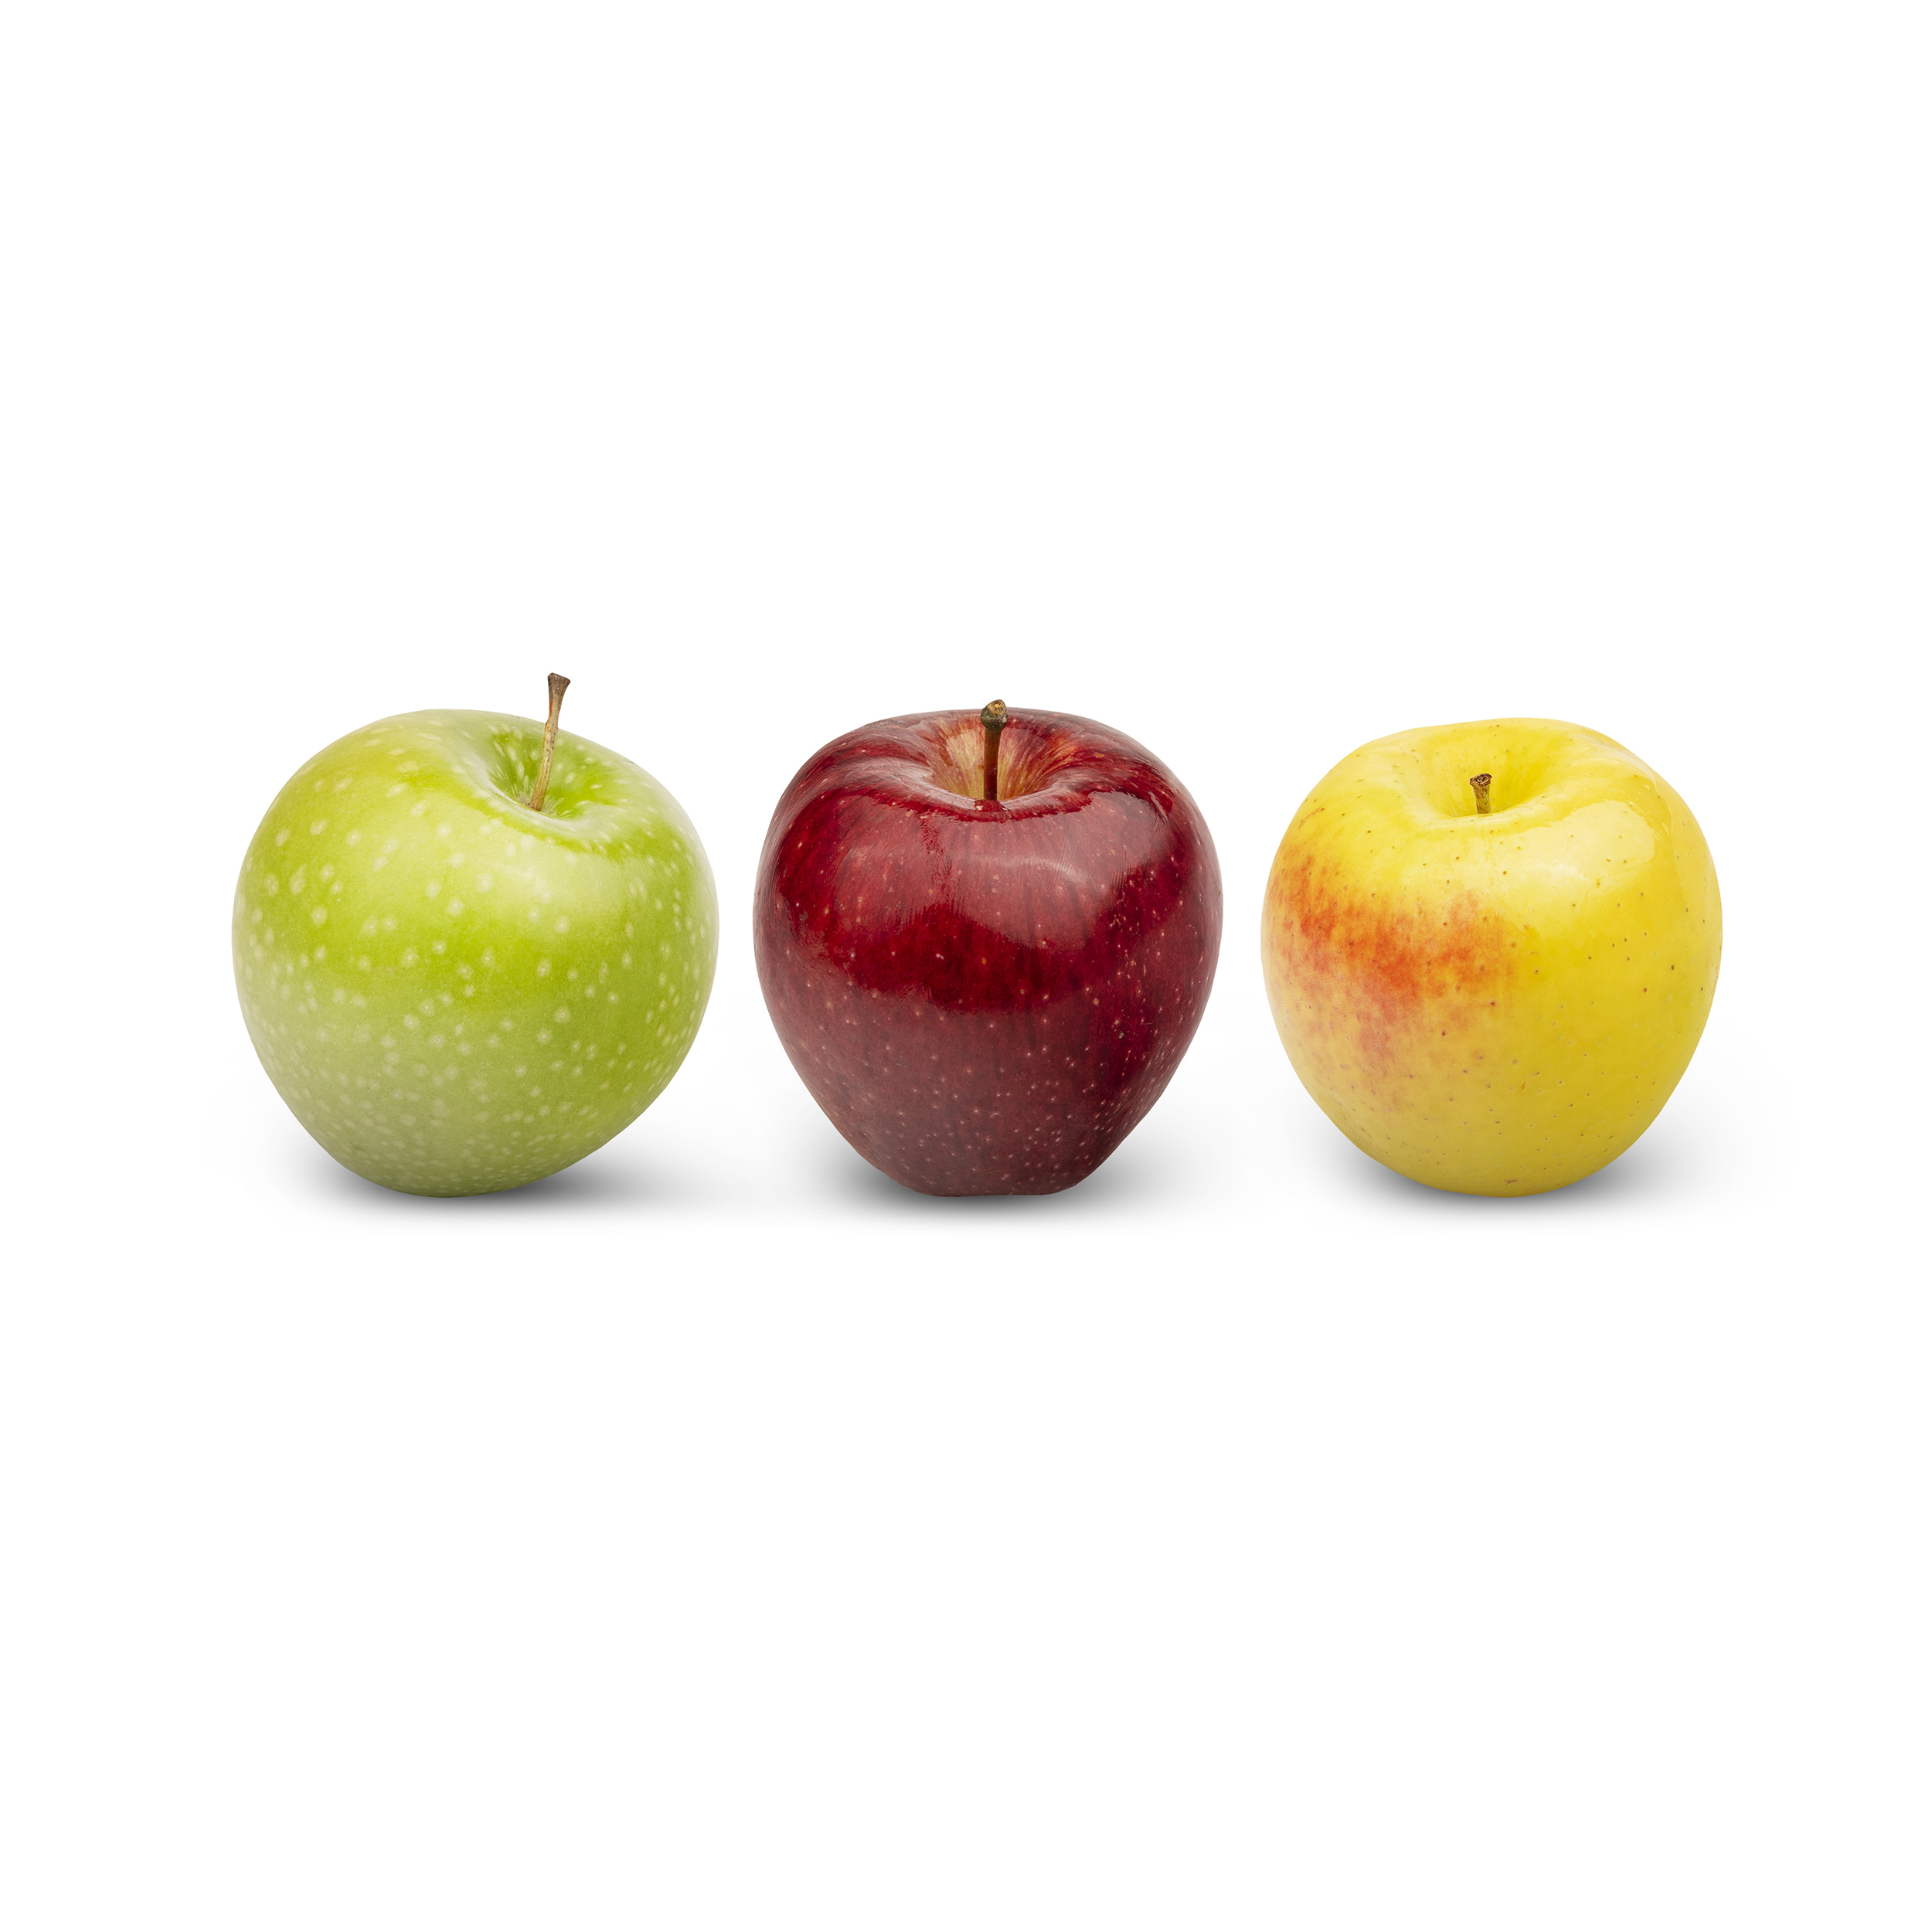 سیب سه رنگ میوری - 1 کیلوگرم